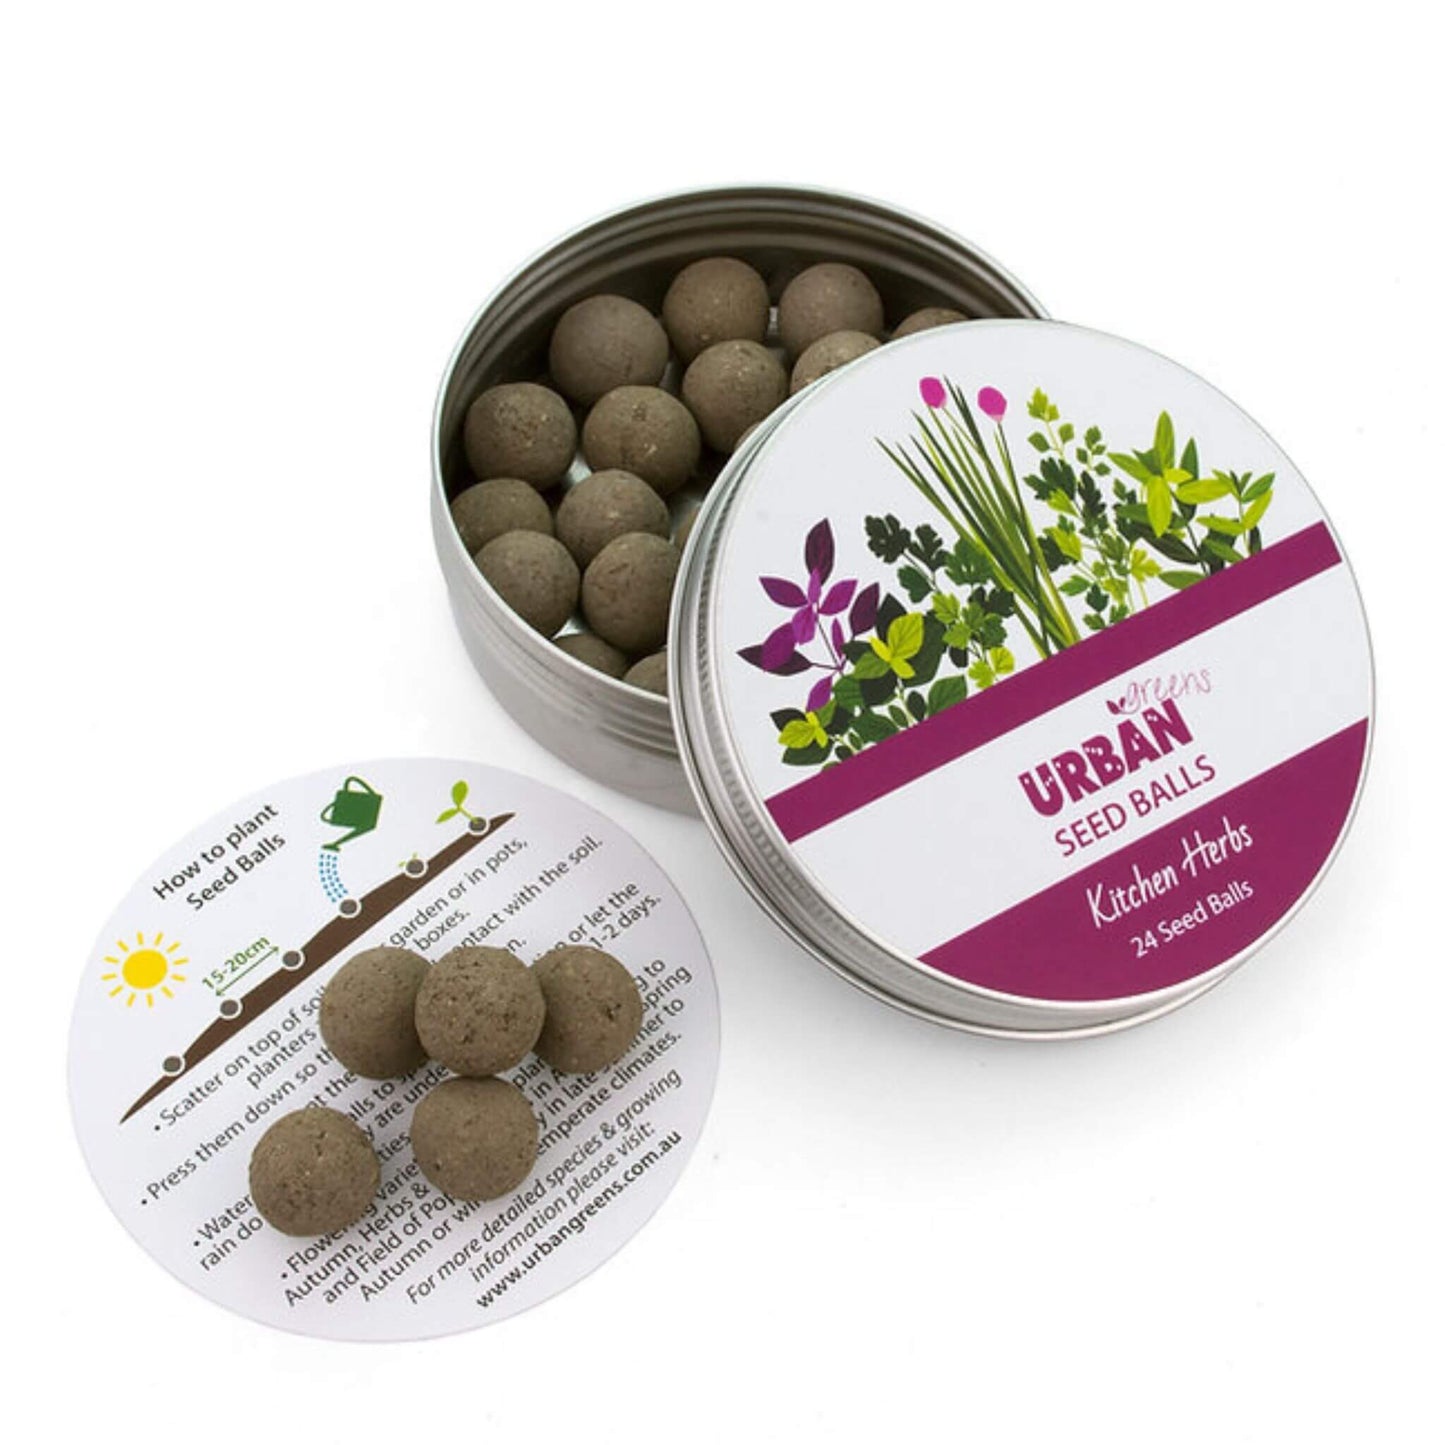 UrbanGreens Seeds balls tin of 24 Seeds balls - Kitchen Herbs